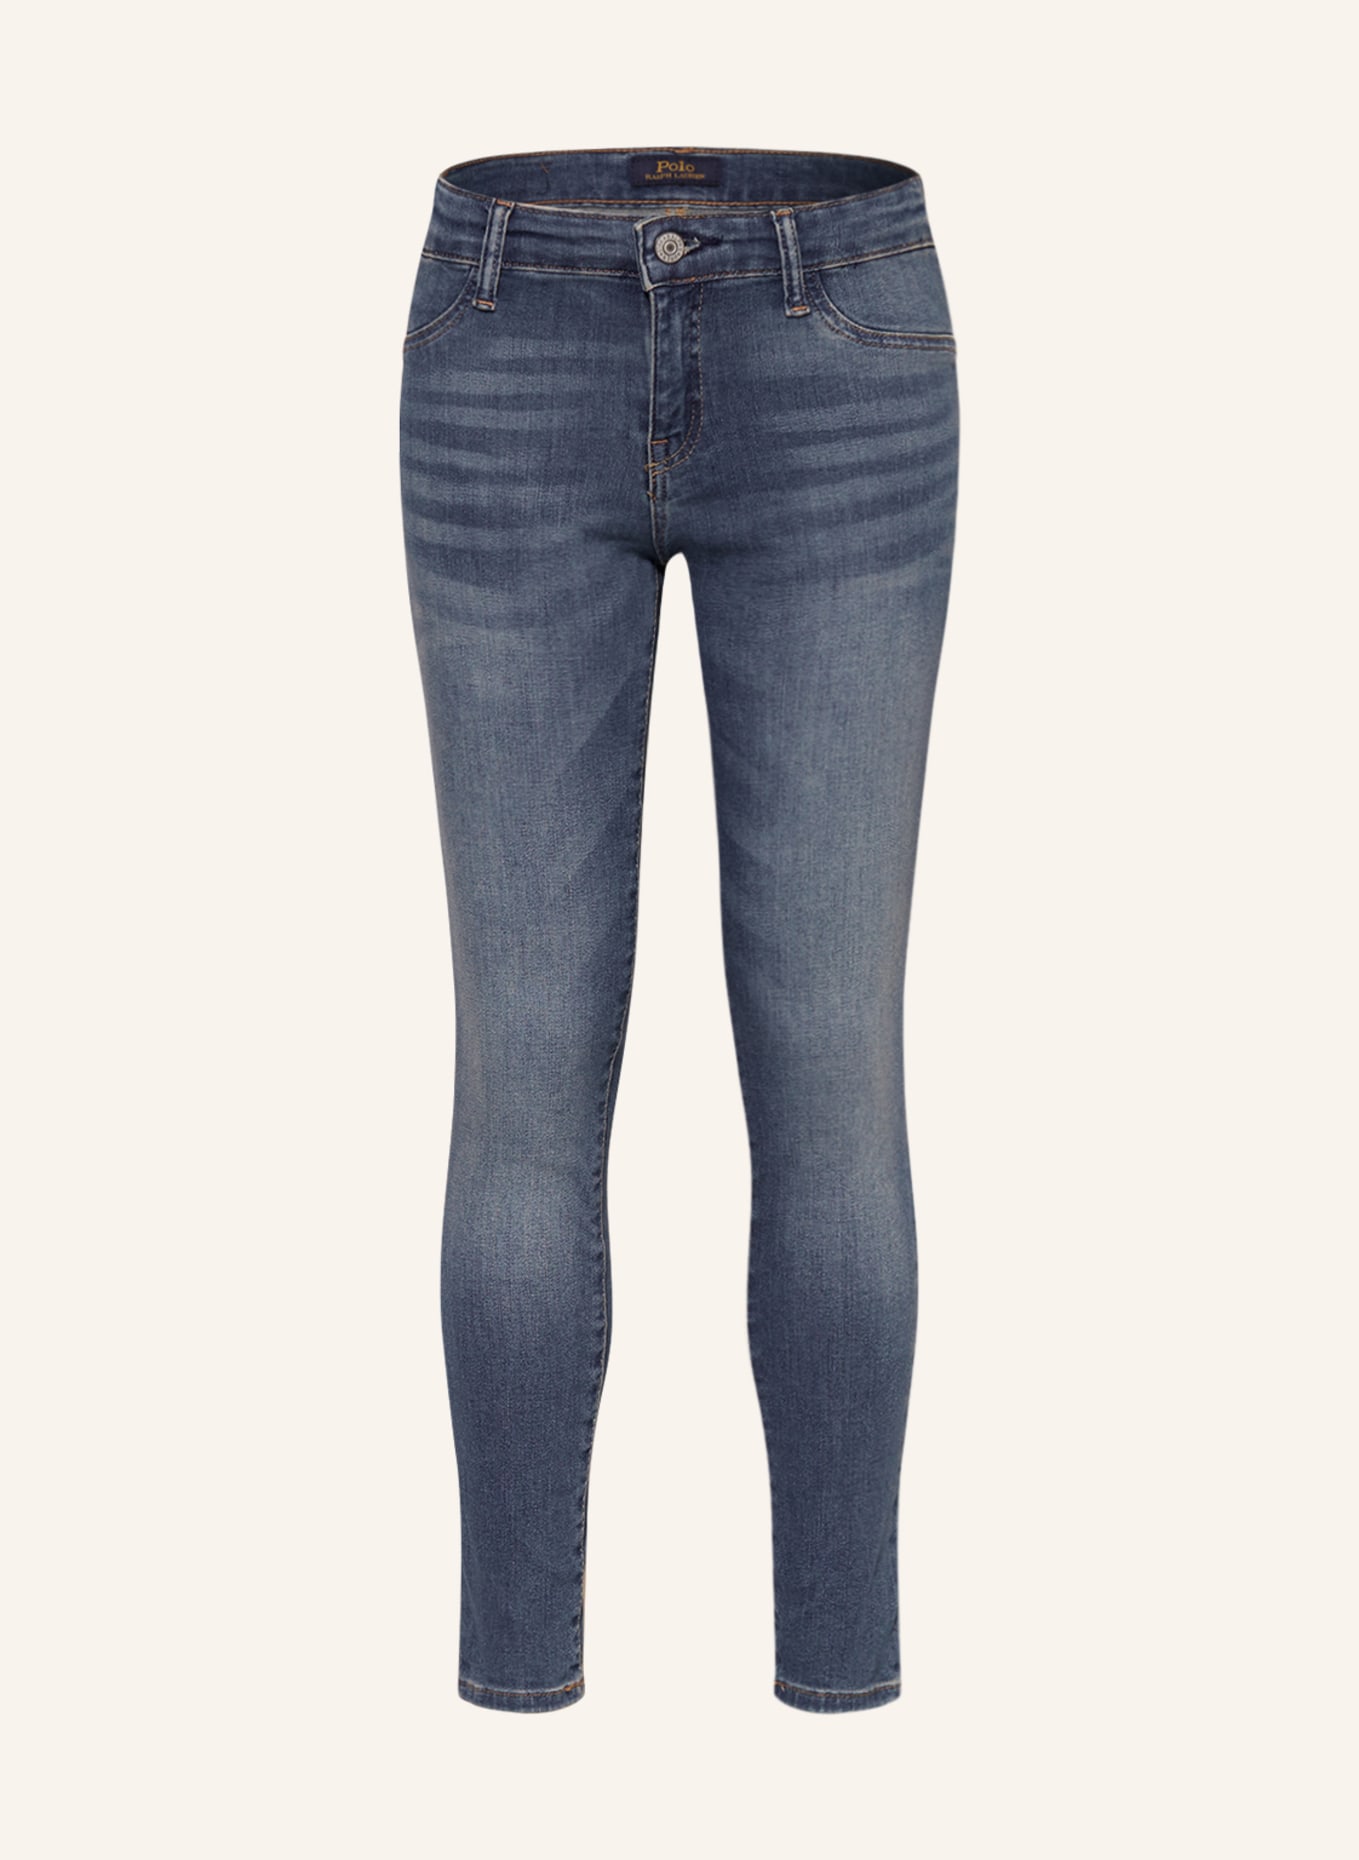 POLO RALPH LAUREN Jeans Skinny Fit, Farbe: 001 LUCINDA WASH (Bild 1)